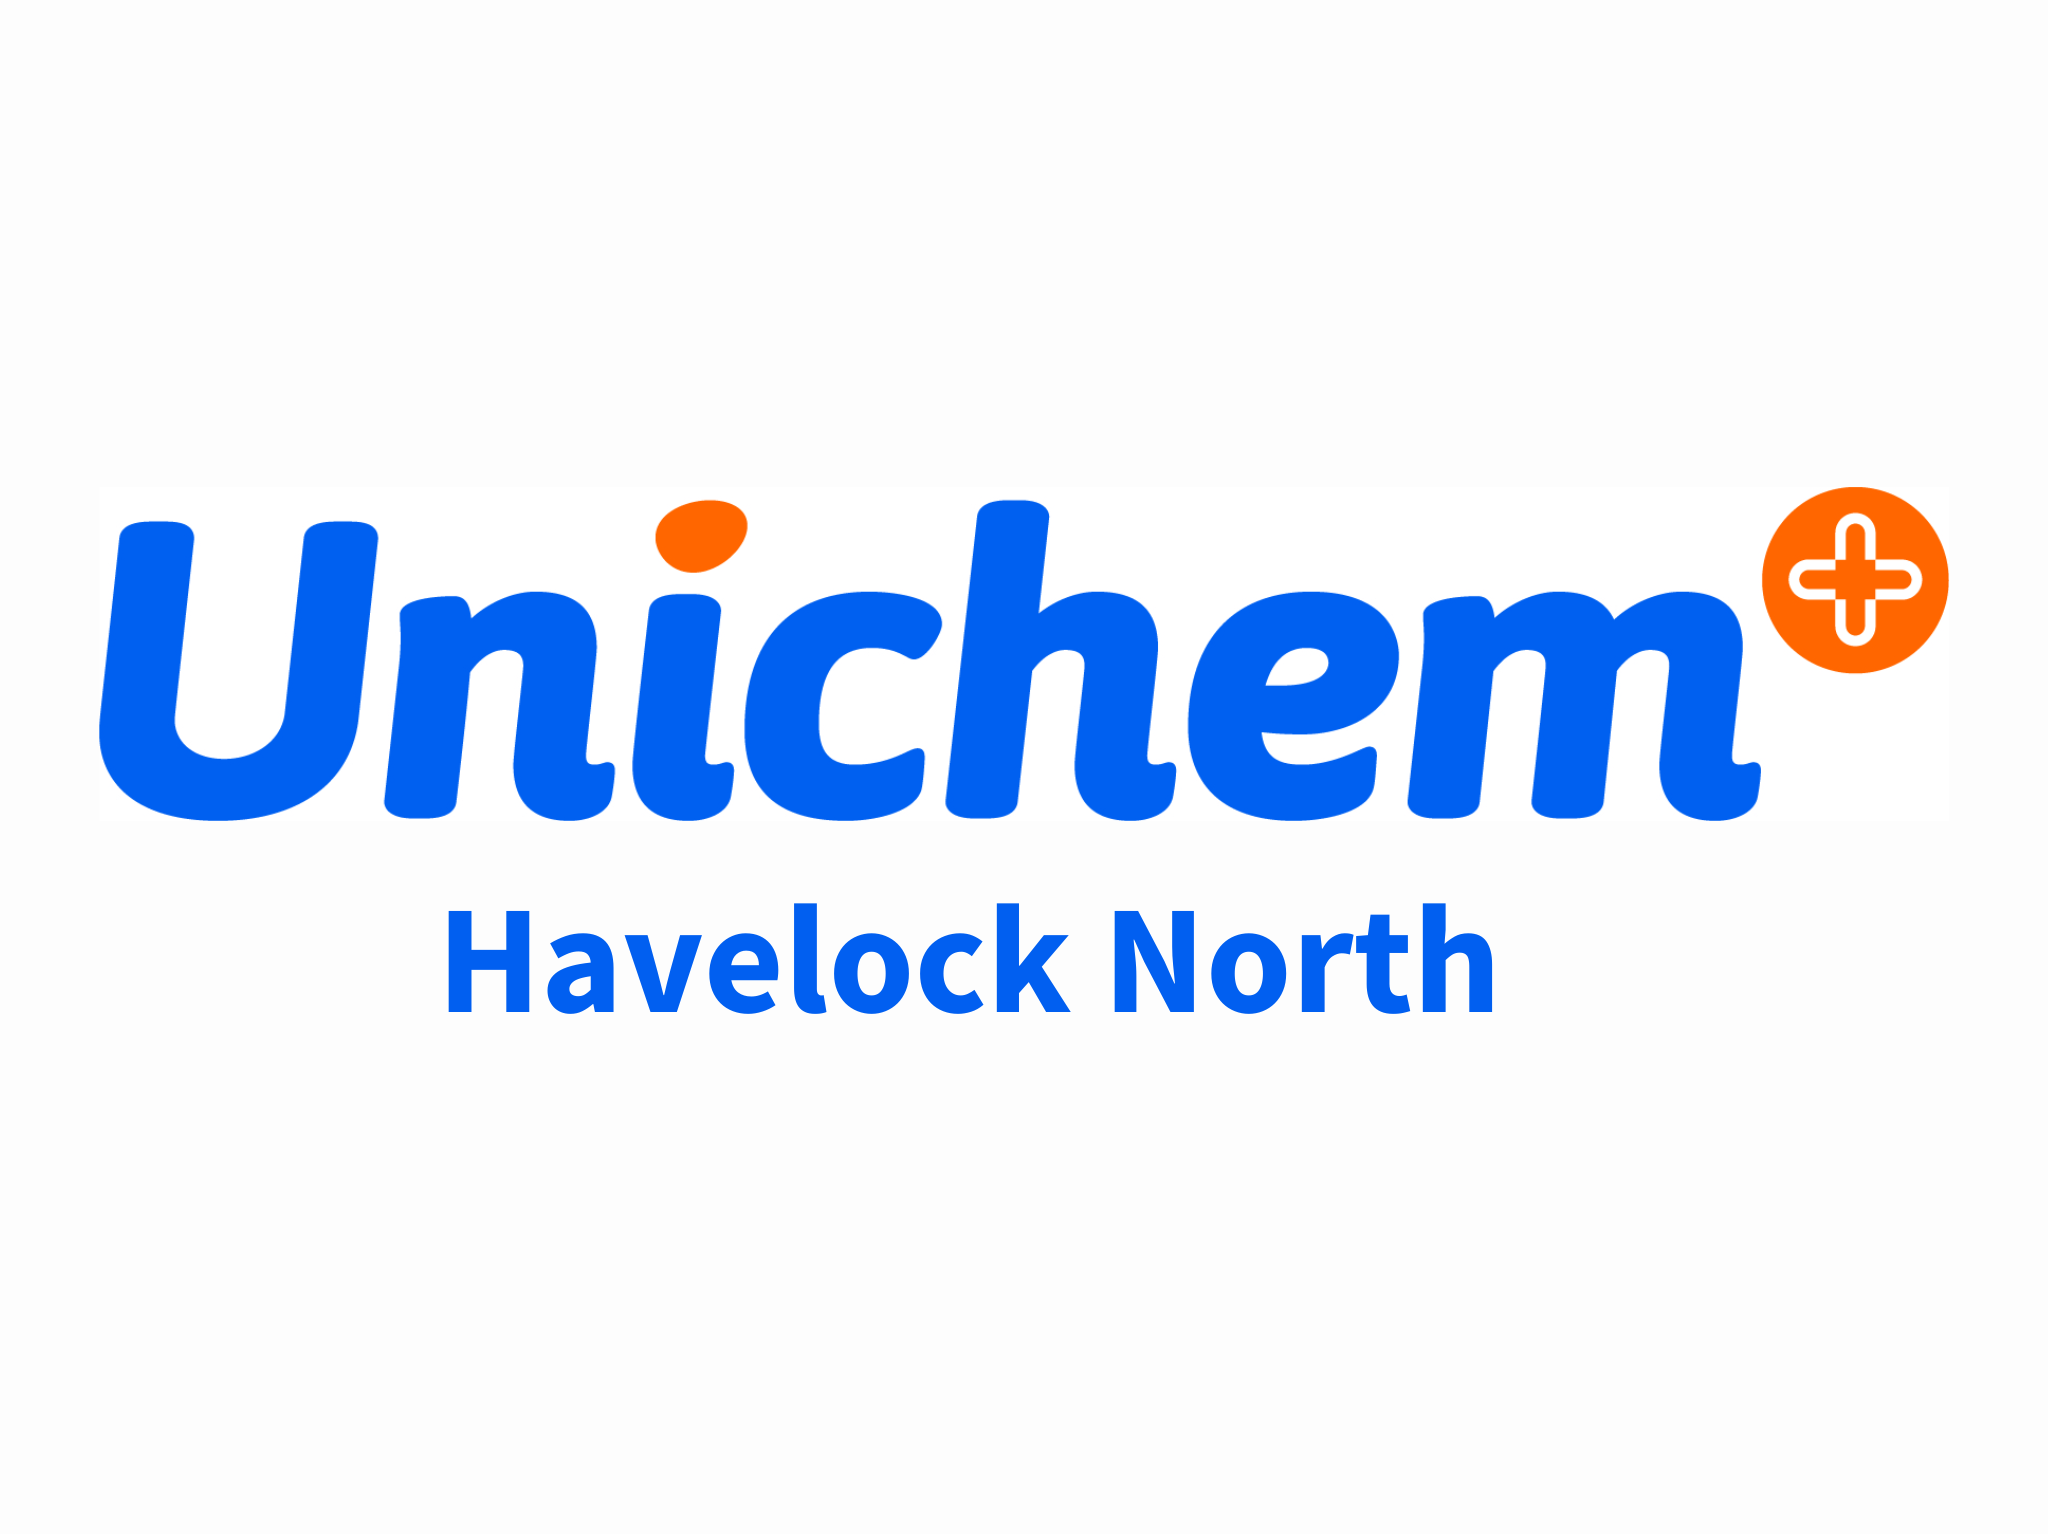 Unichem Havelock North